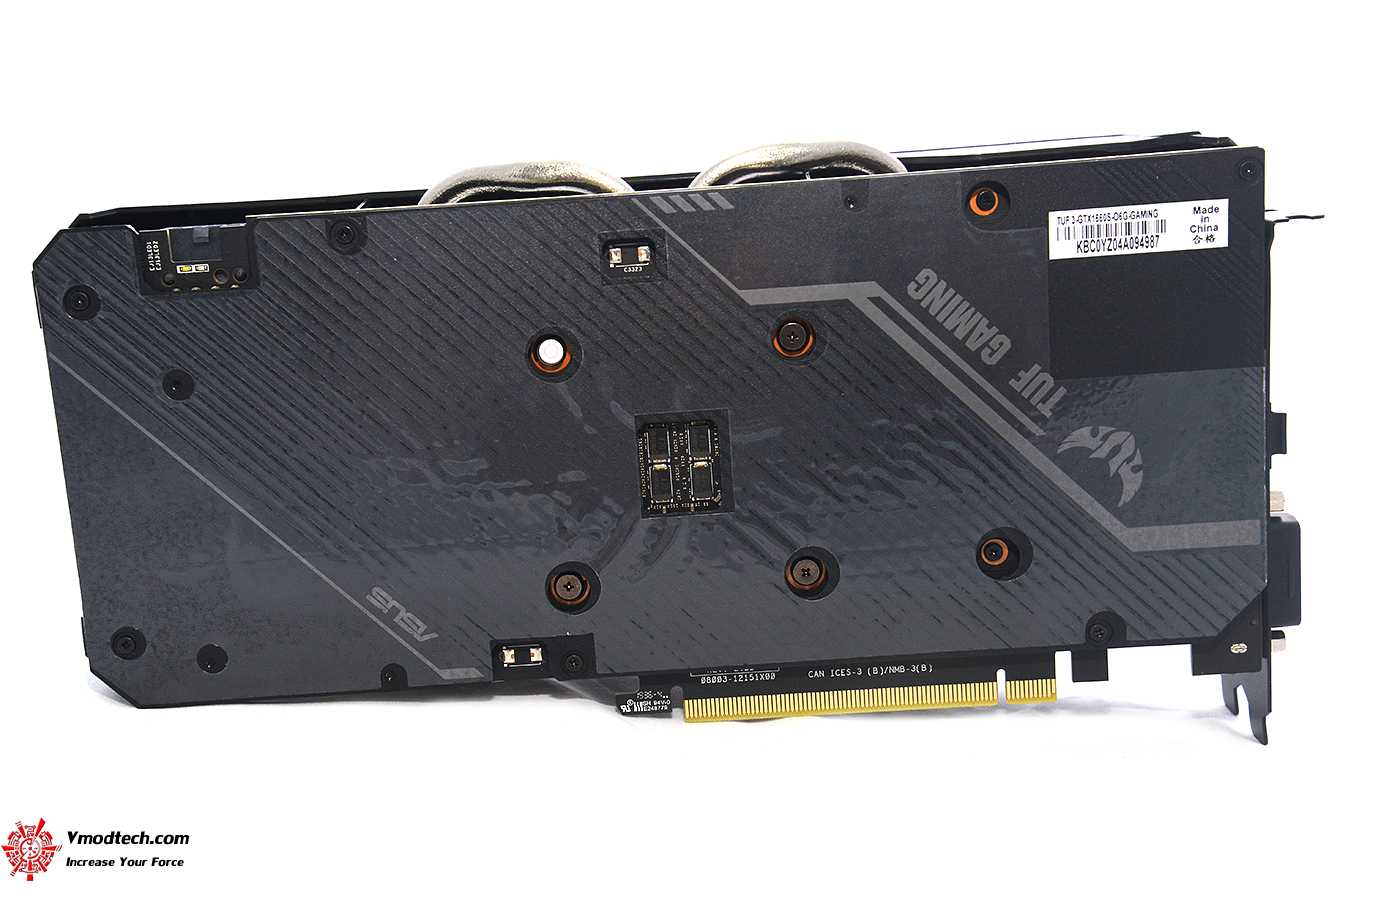 dsc 3839 ASUS TUF Gaming GeForce GTX 1660 SUPER OC Edition 6GB GDDR6 Review